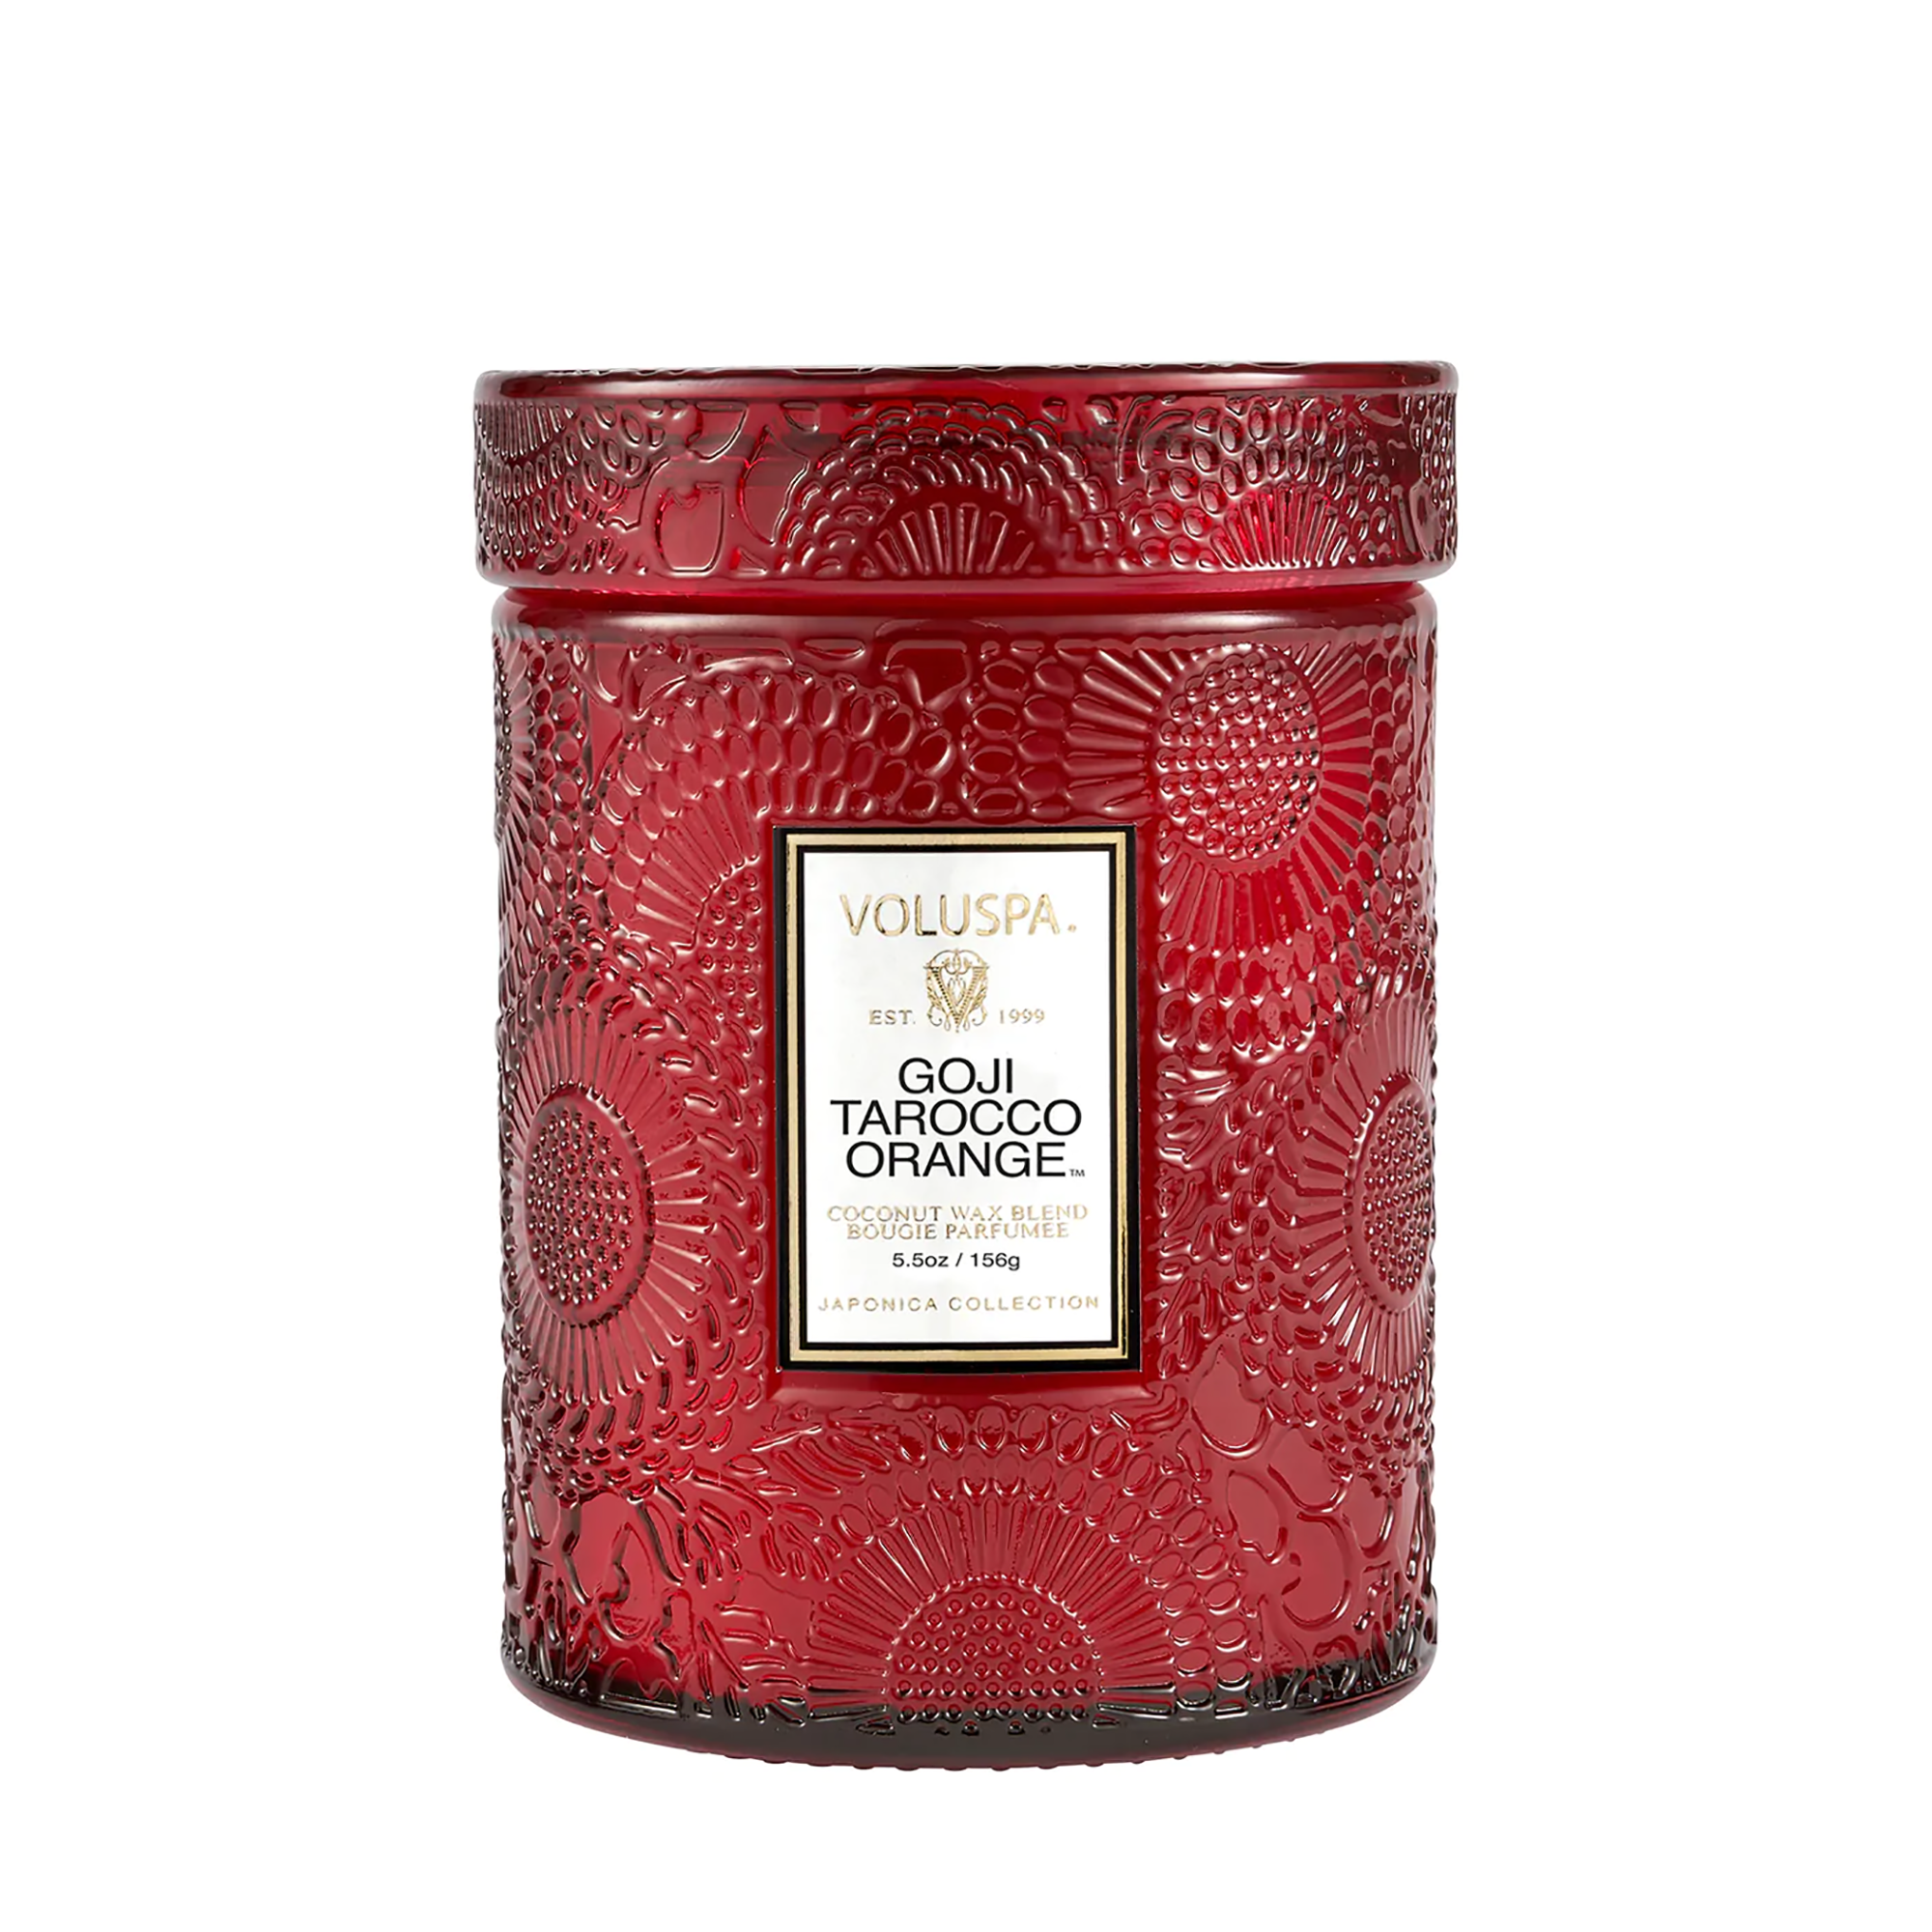  Voluspa Small Jar Candle / GOJI TAROCCO